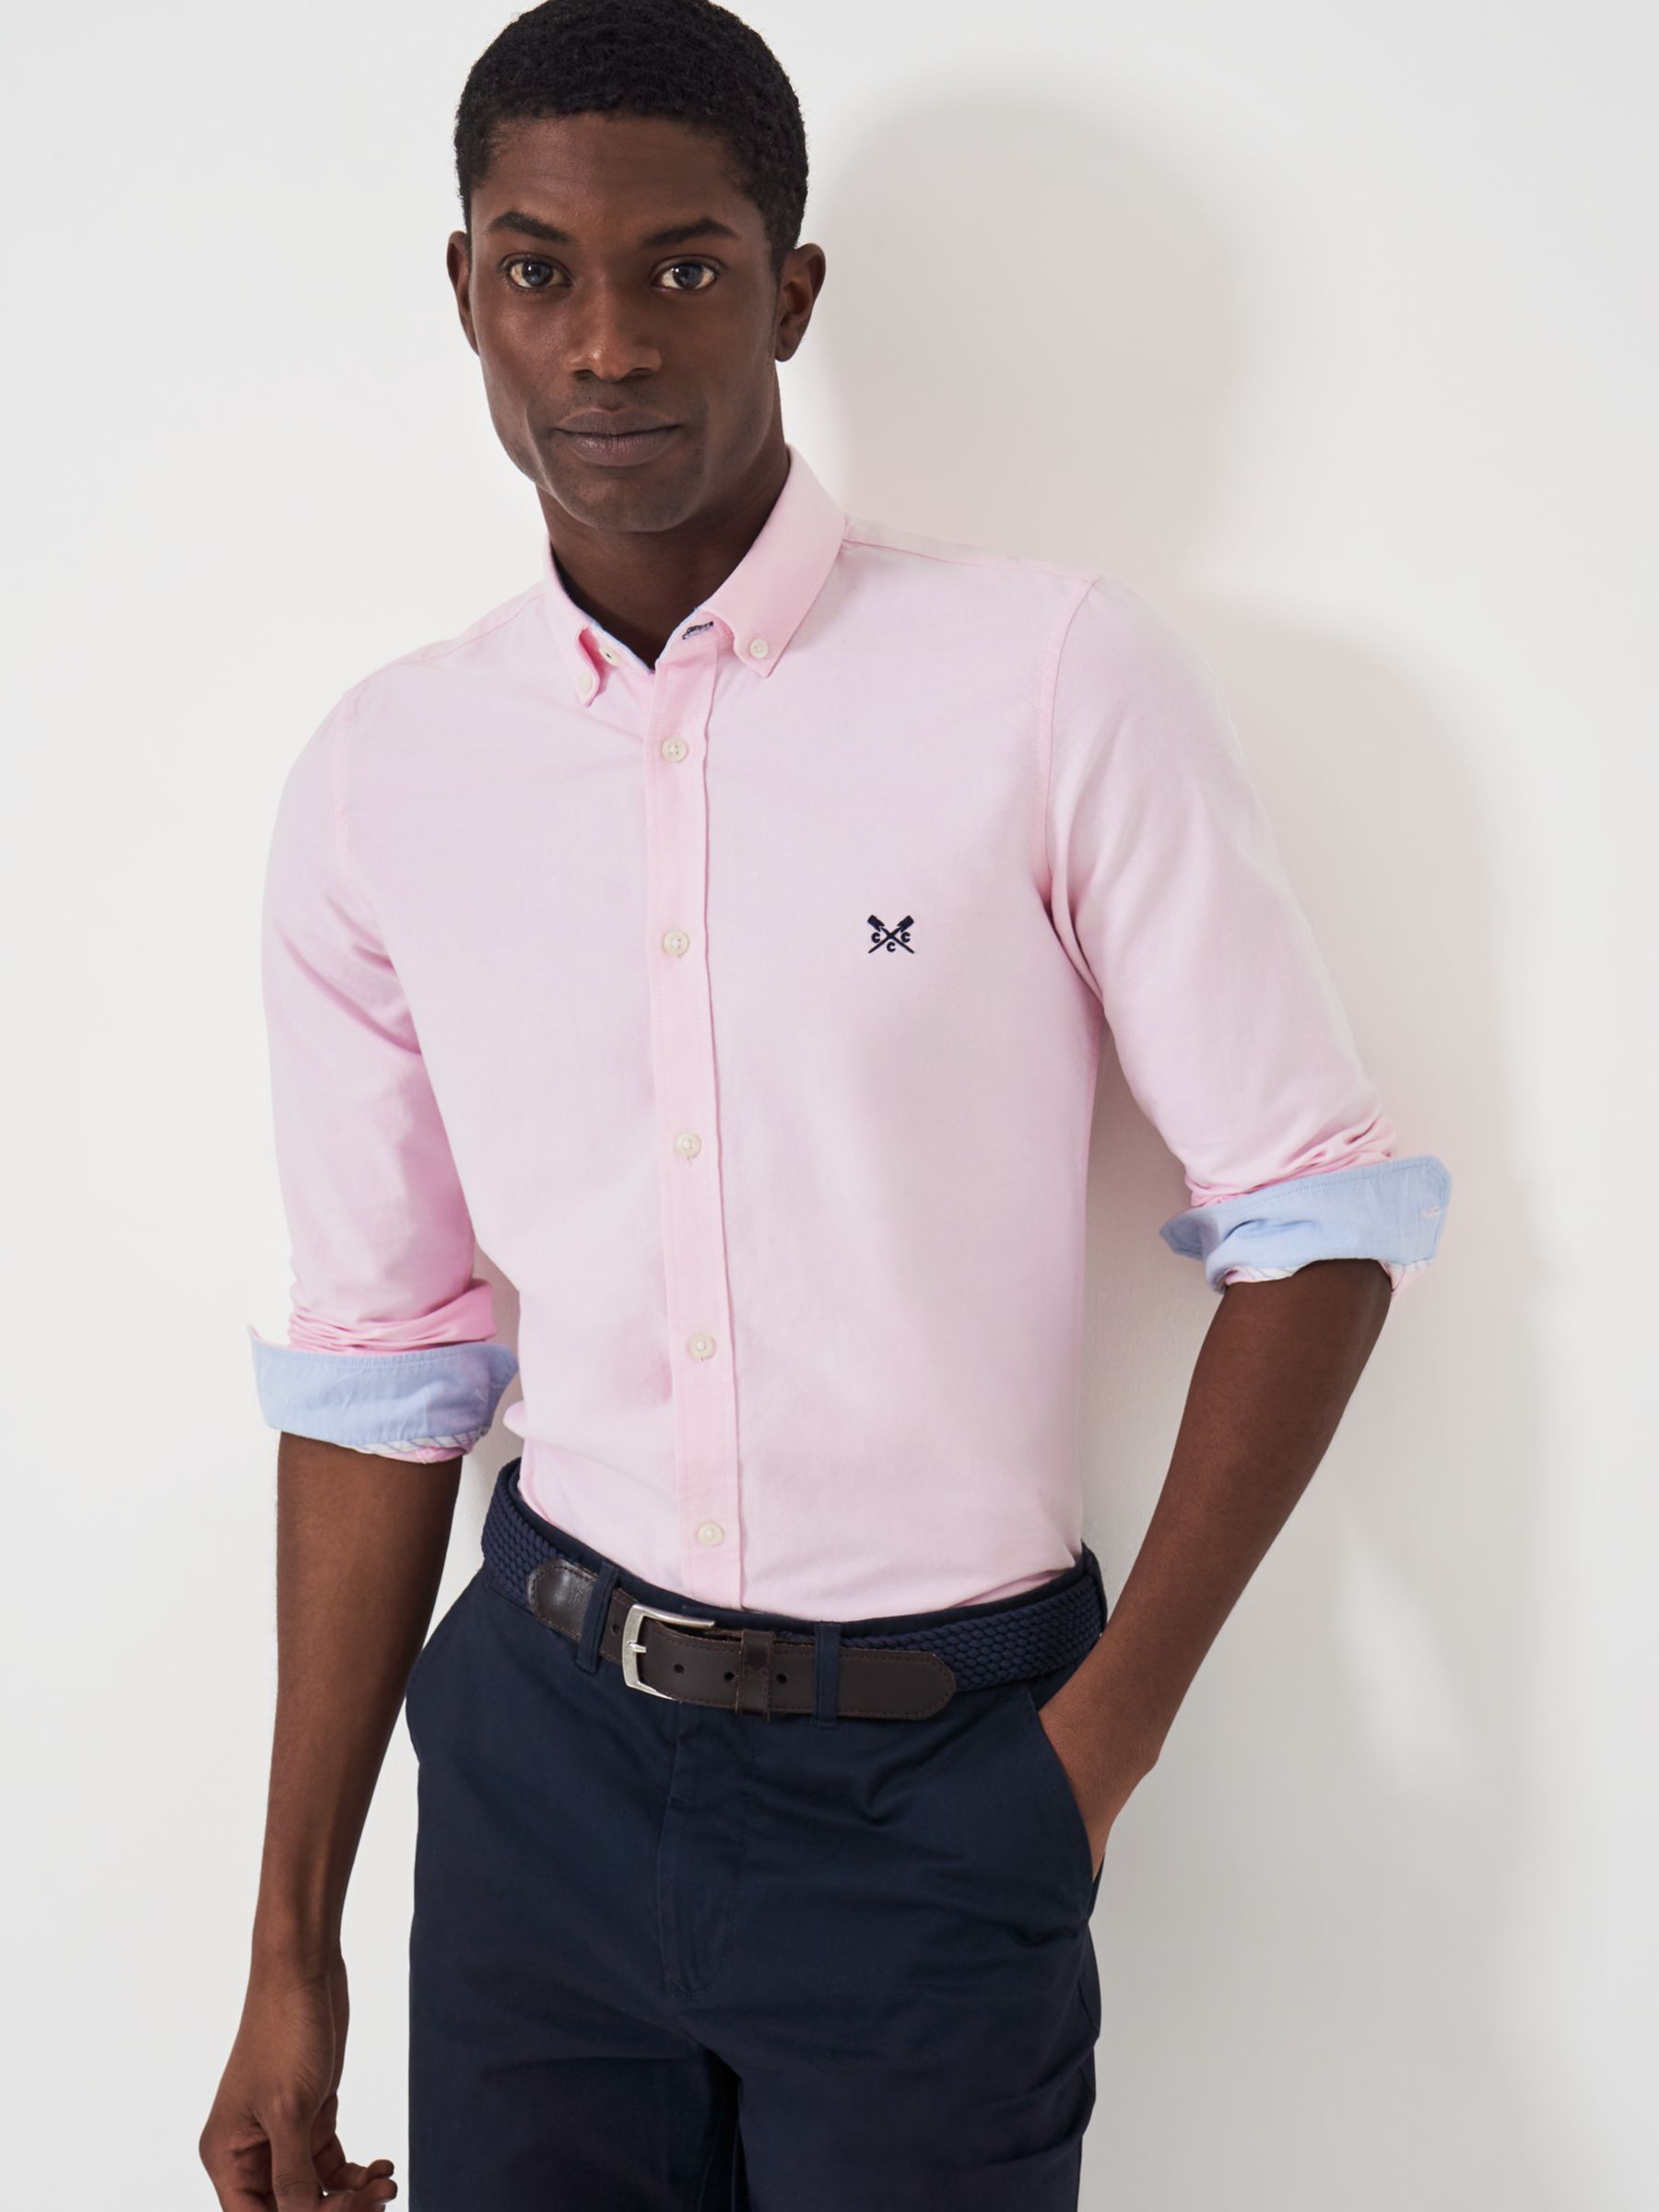 Crew Clothing Slim Fit Oxford Shirt, Pastel Pink, S